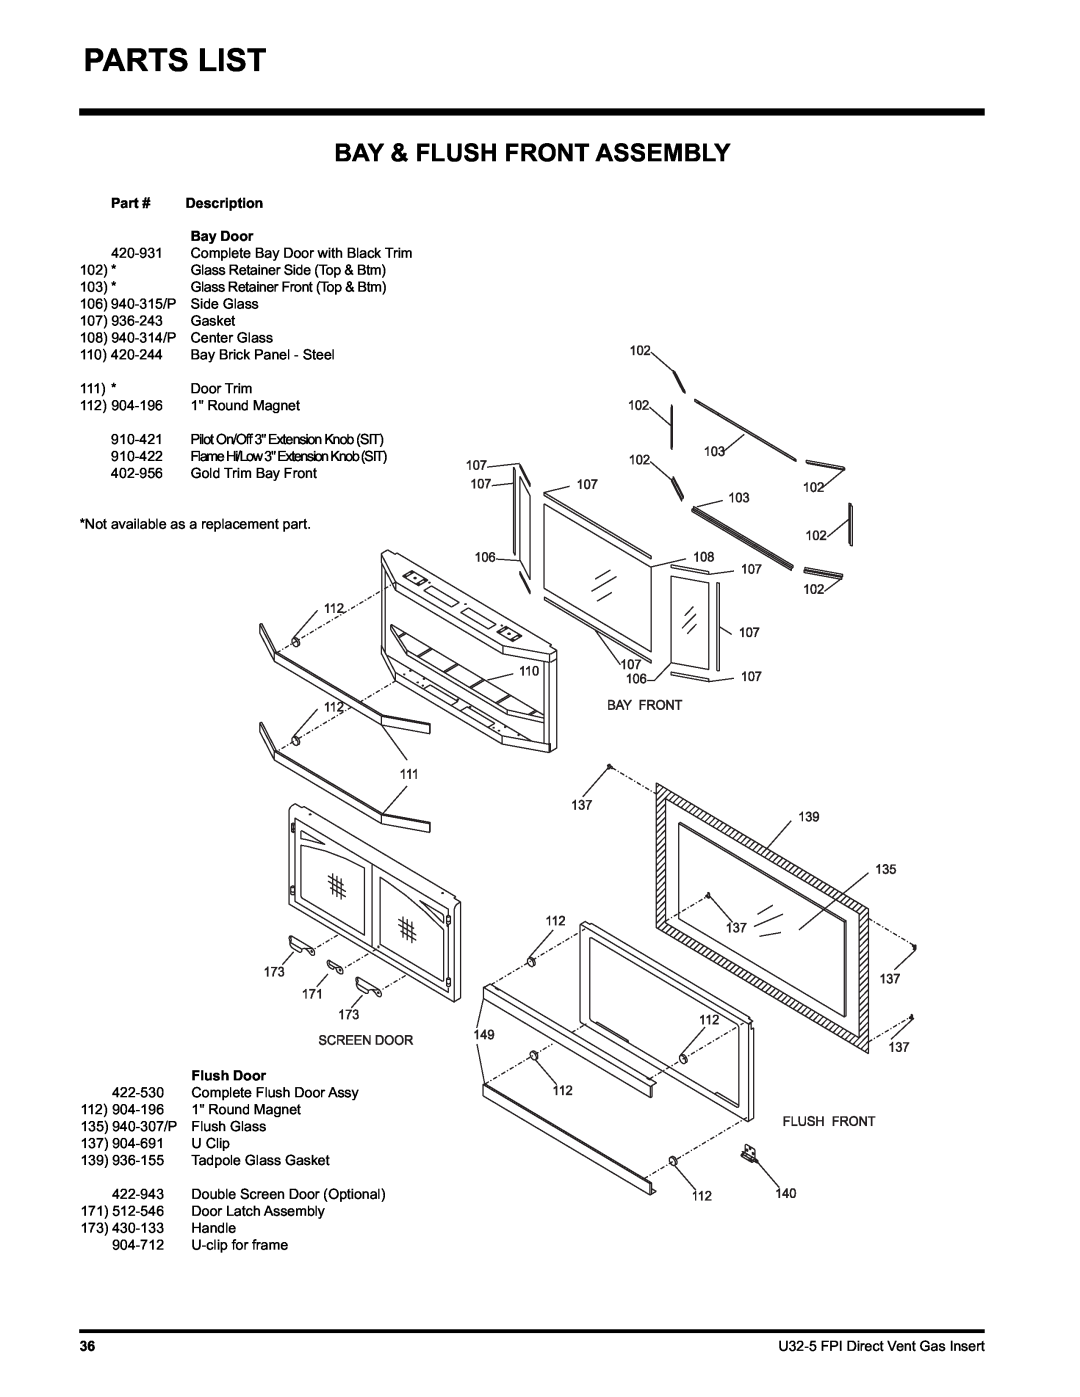 Hampton Direct U32 installation manual Parts List, Bay & Flush Front Assembly, Description, Bay Door, Flush Door 